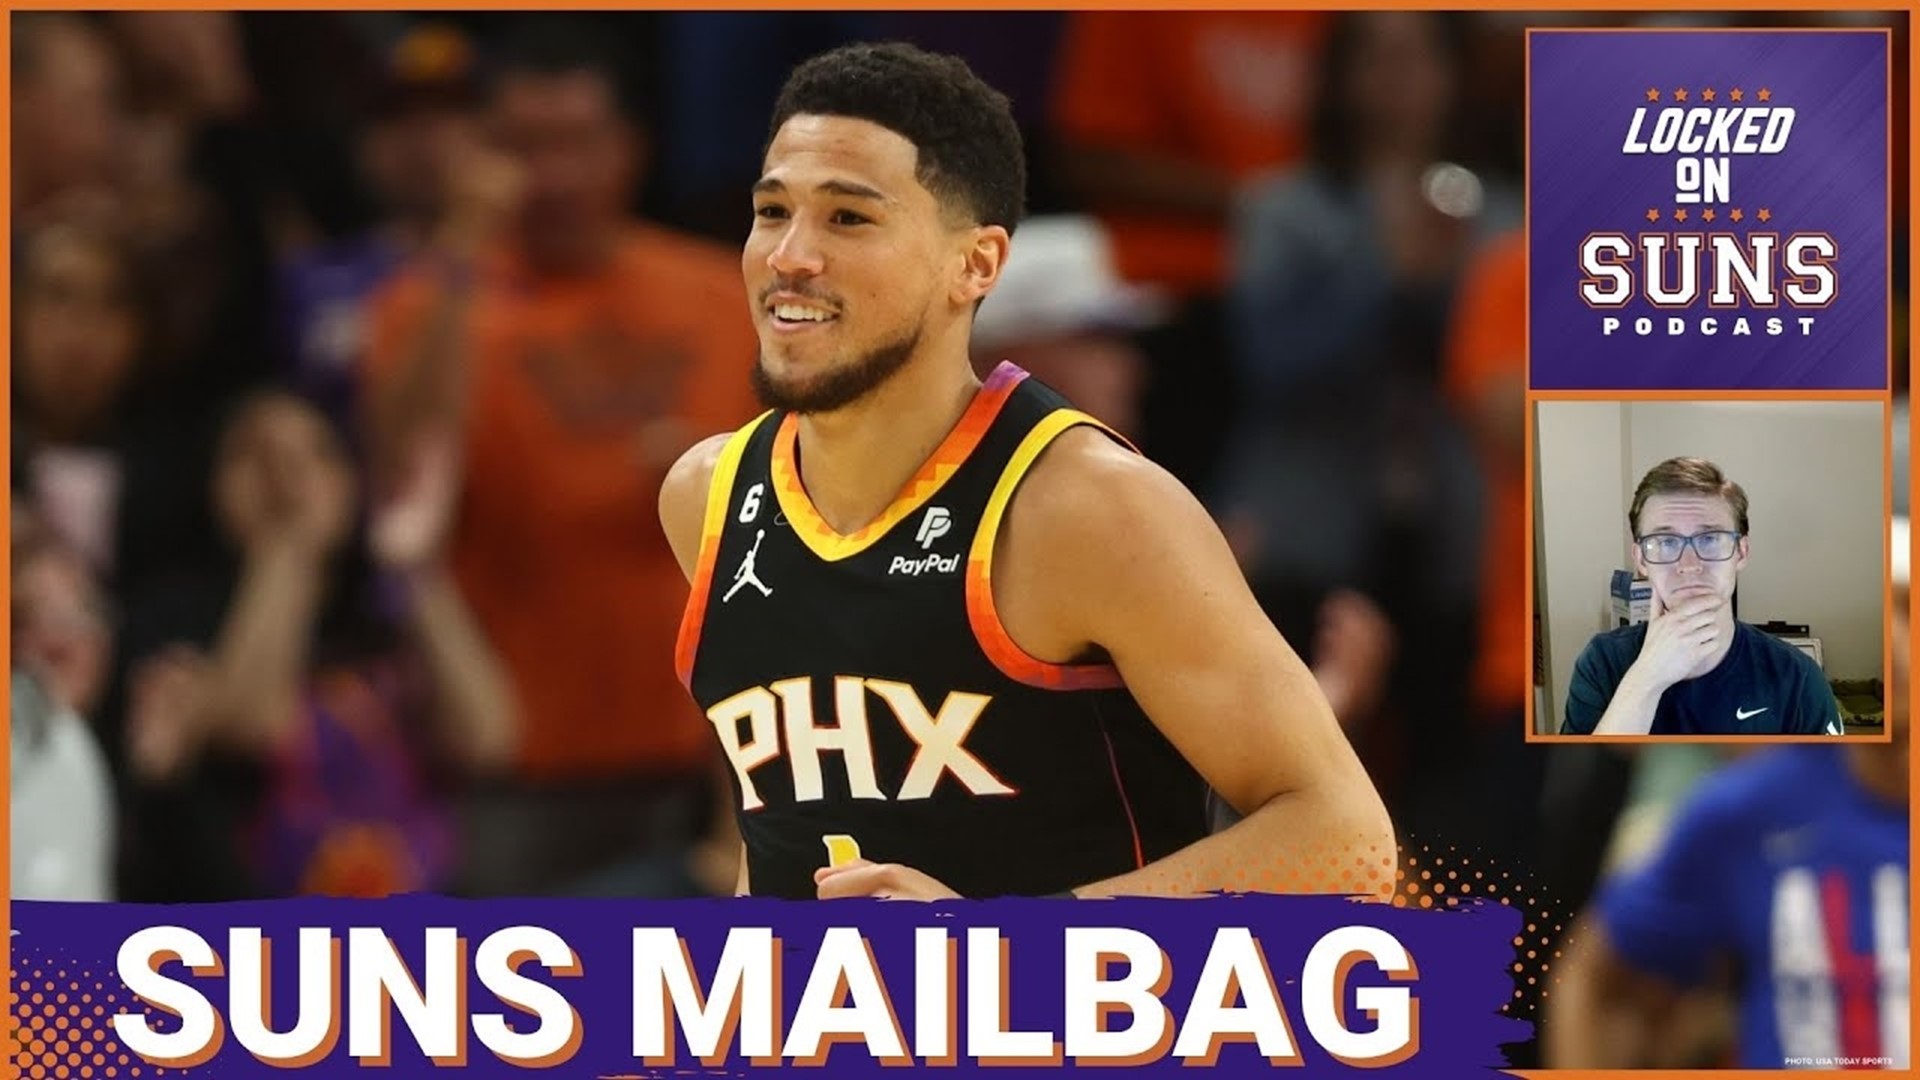 PayPal to advertise on Phoenix Suns jerseys - Phoenix Business Journal